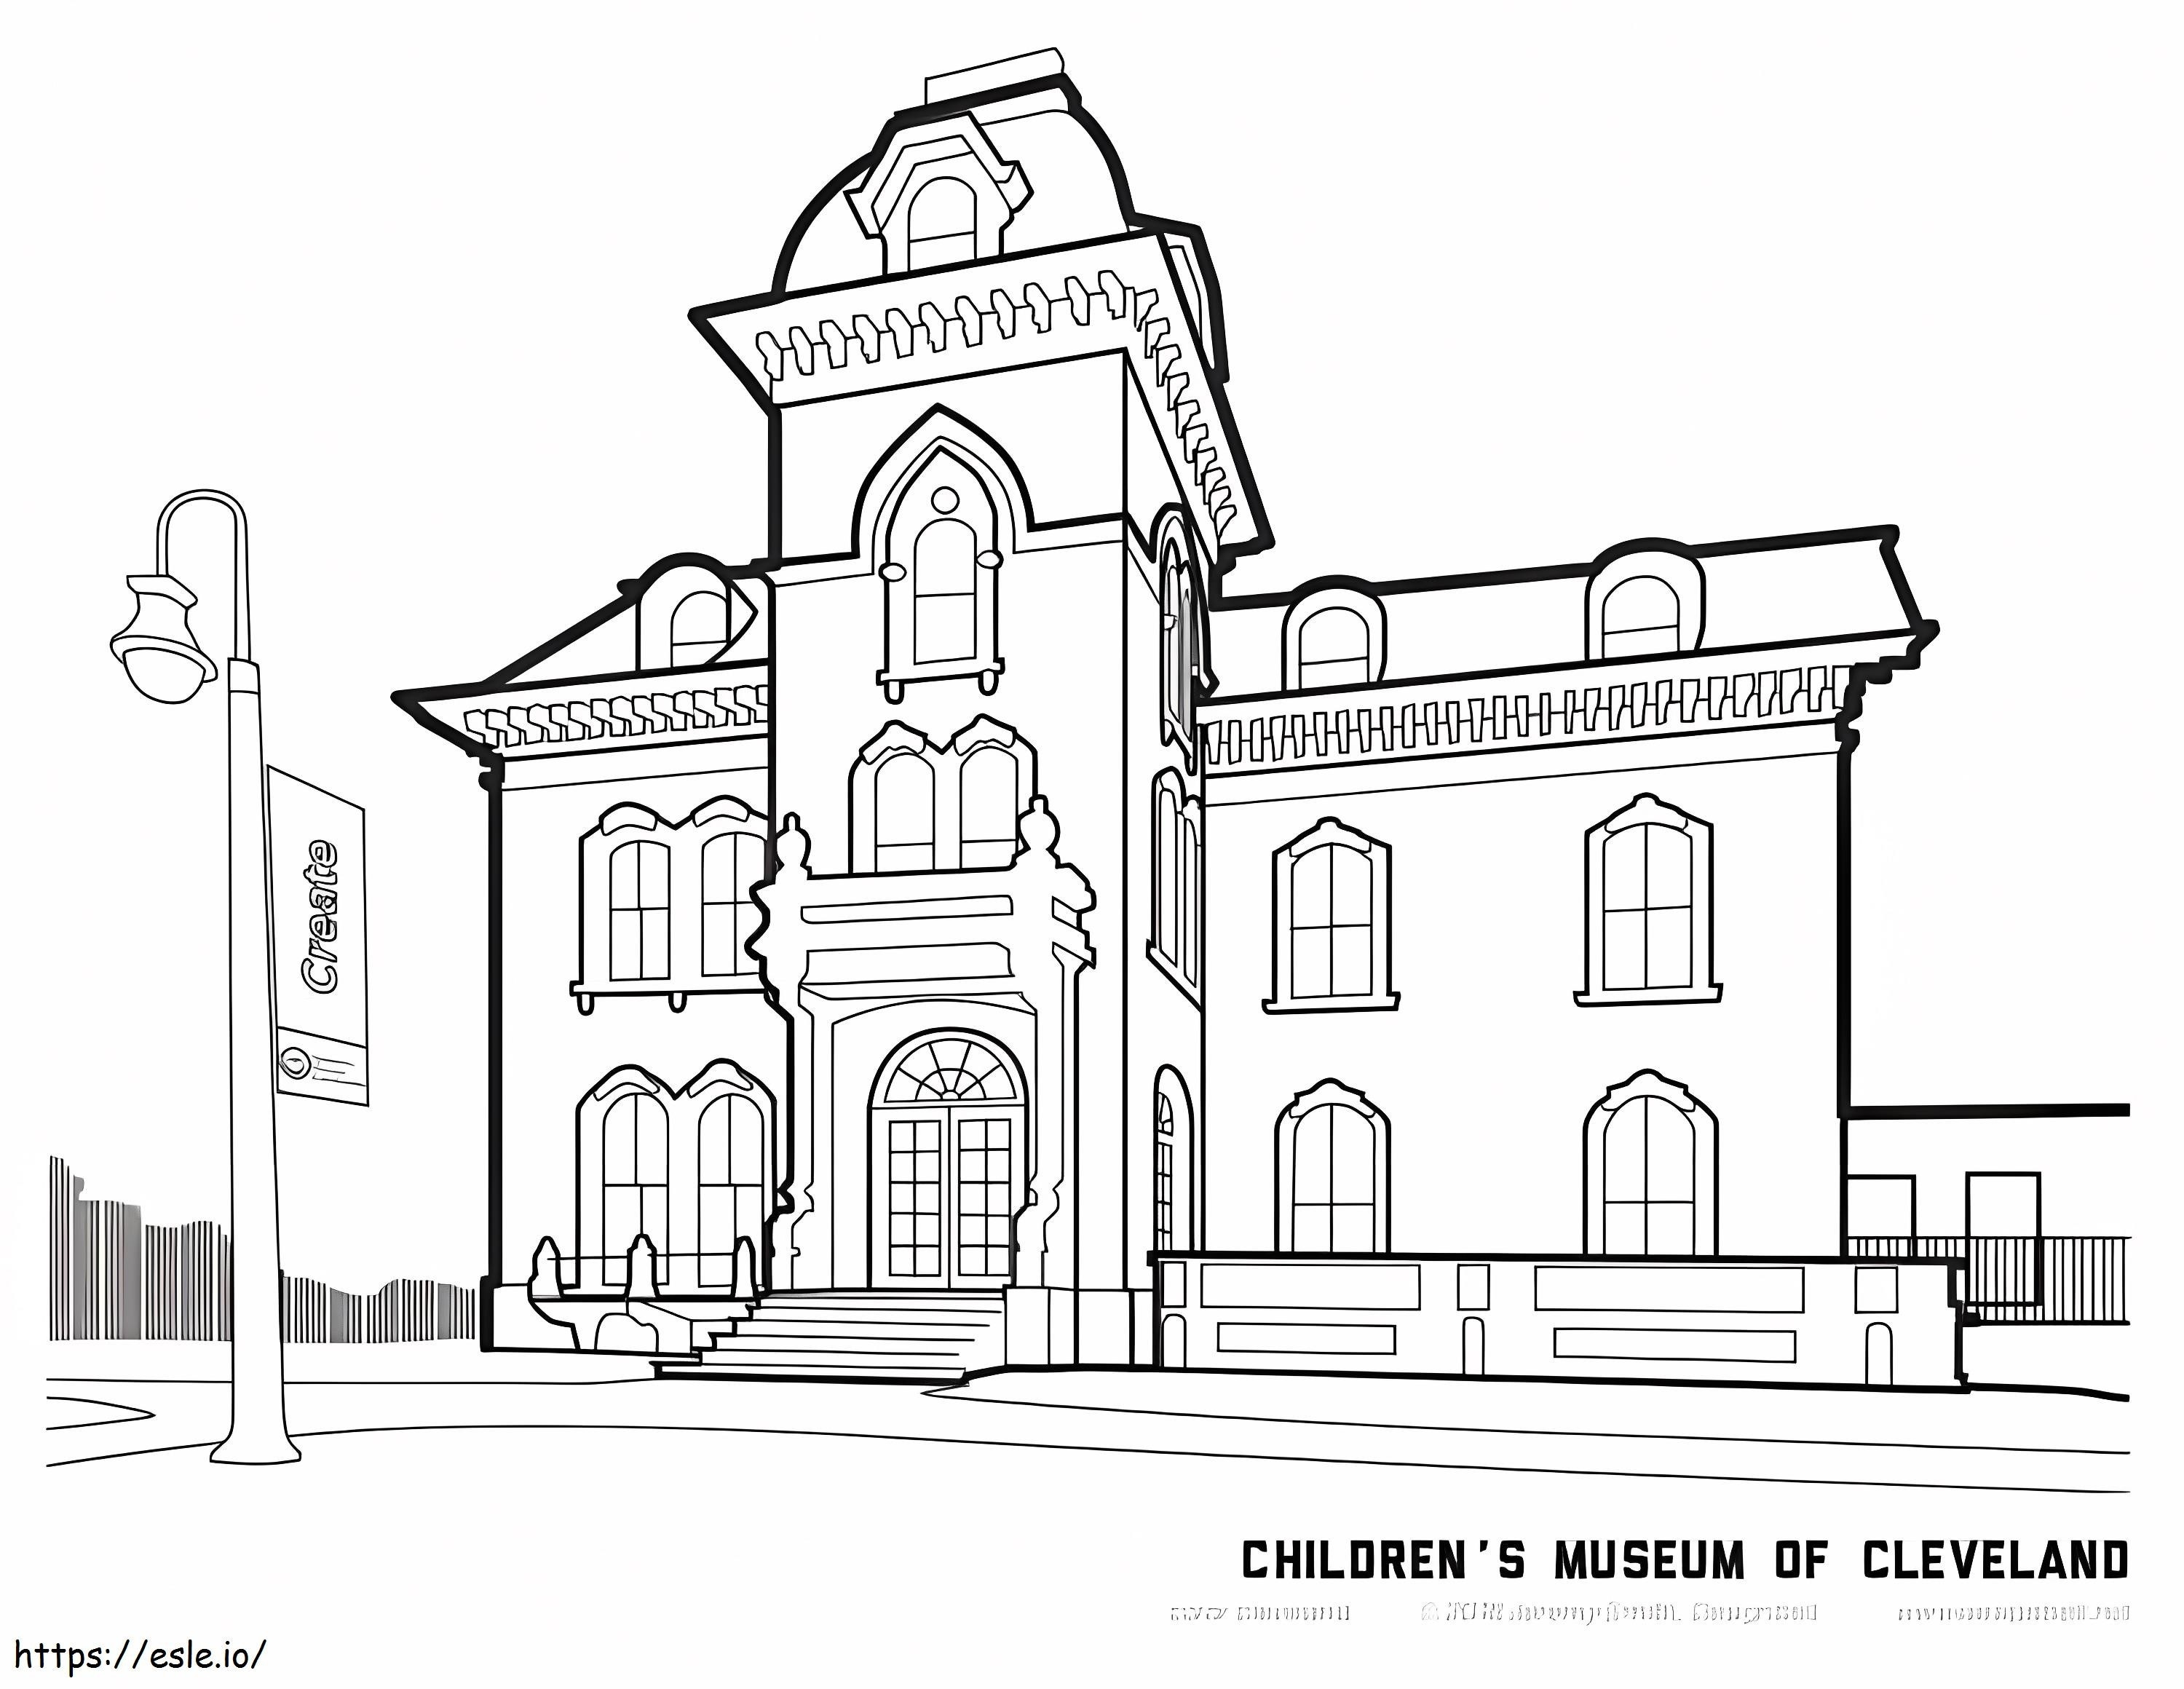 Clevelandin lastenmuseo värityskuva